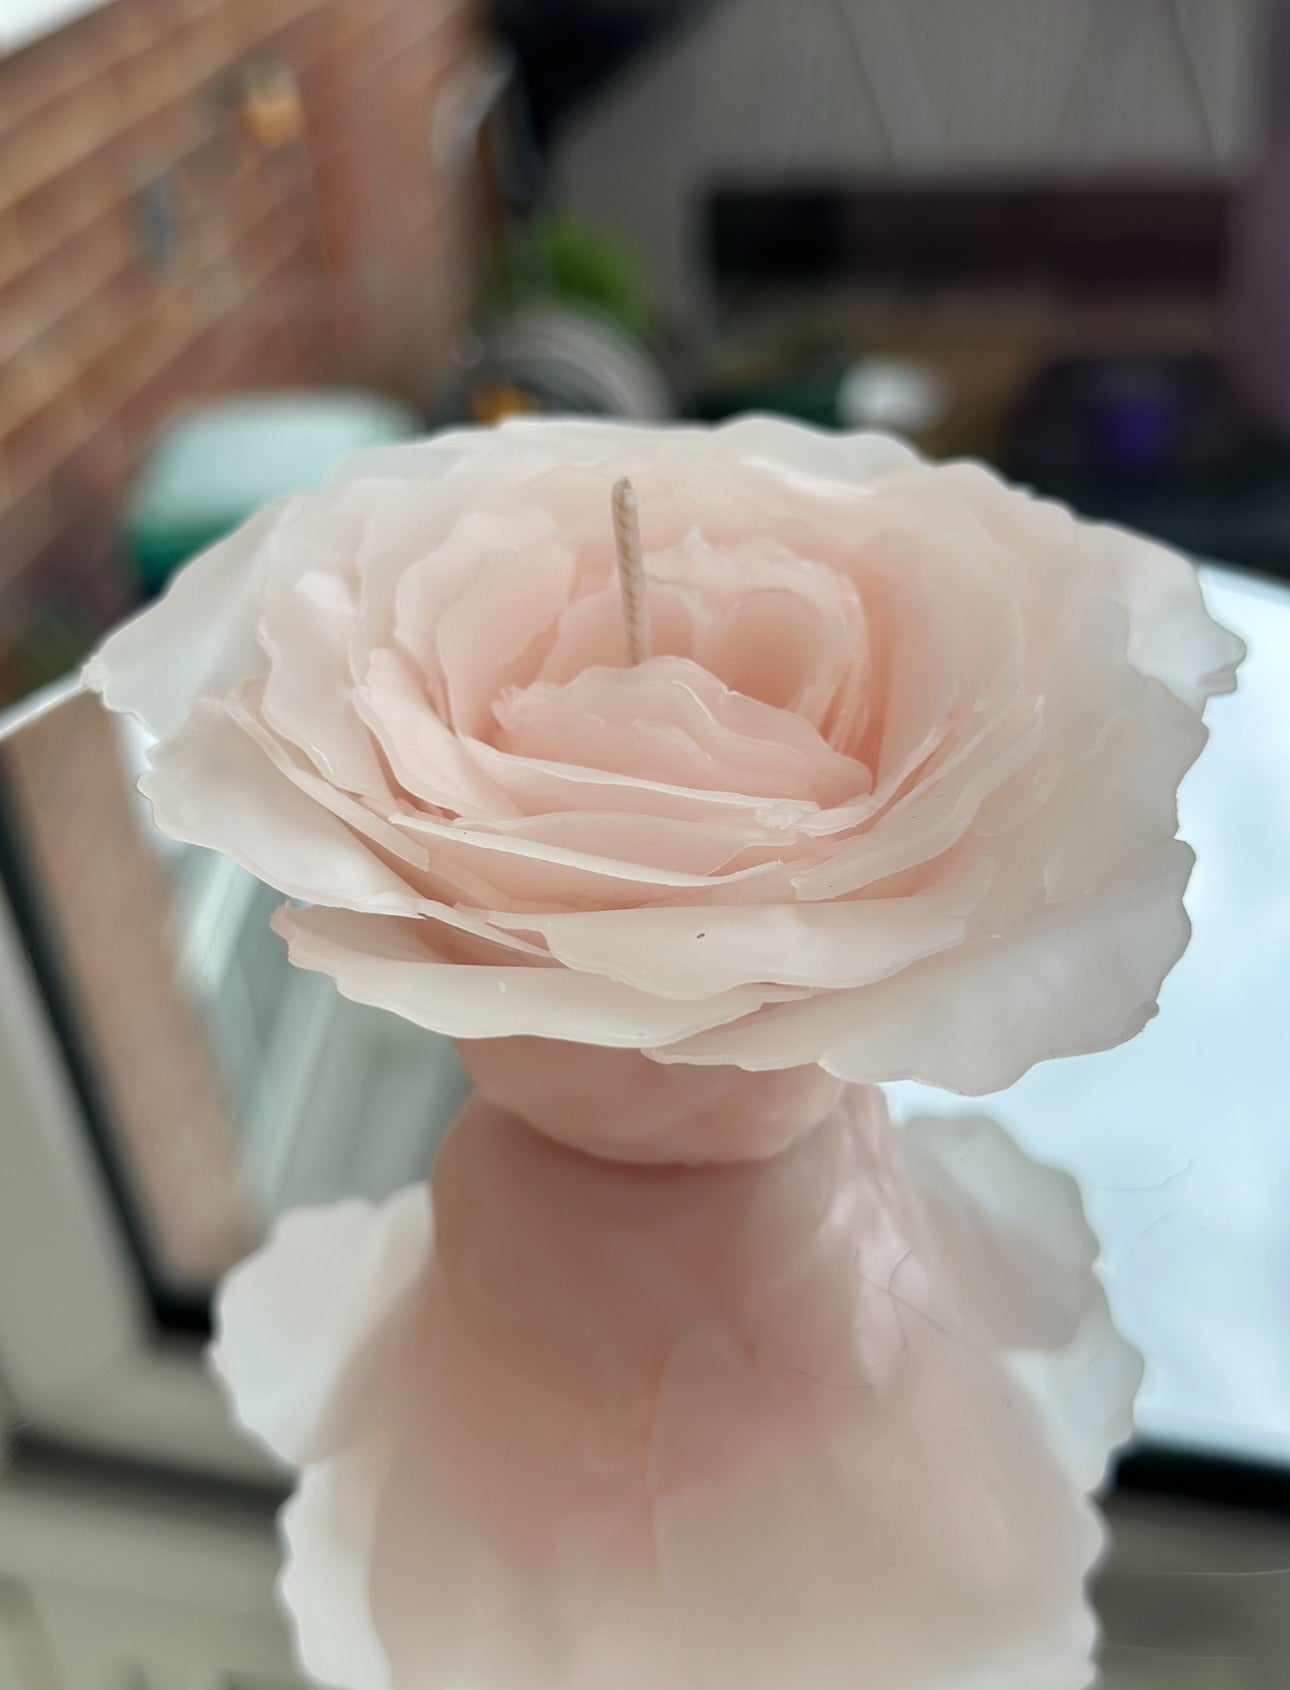 Handmade realistic flower candle 100% organic beeswax